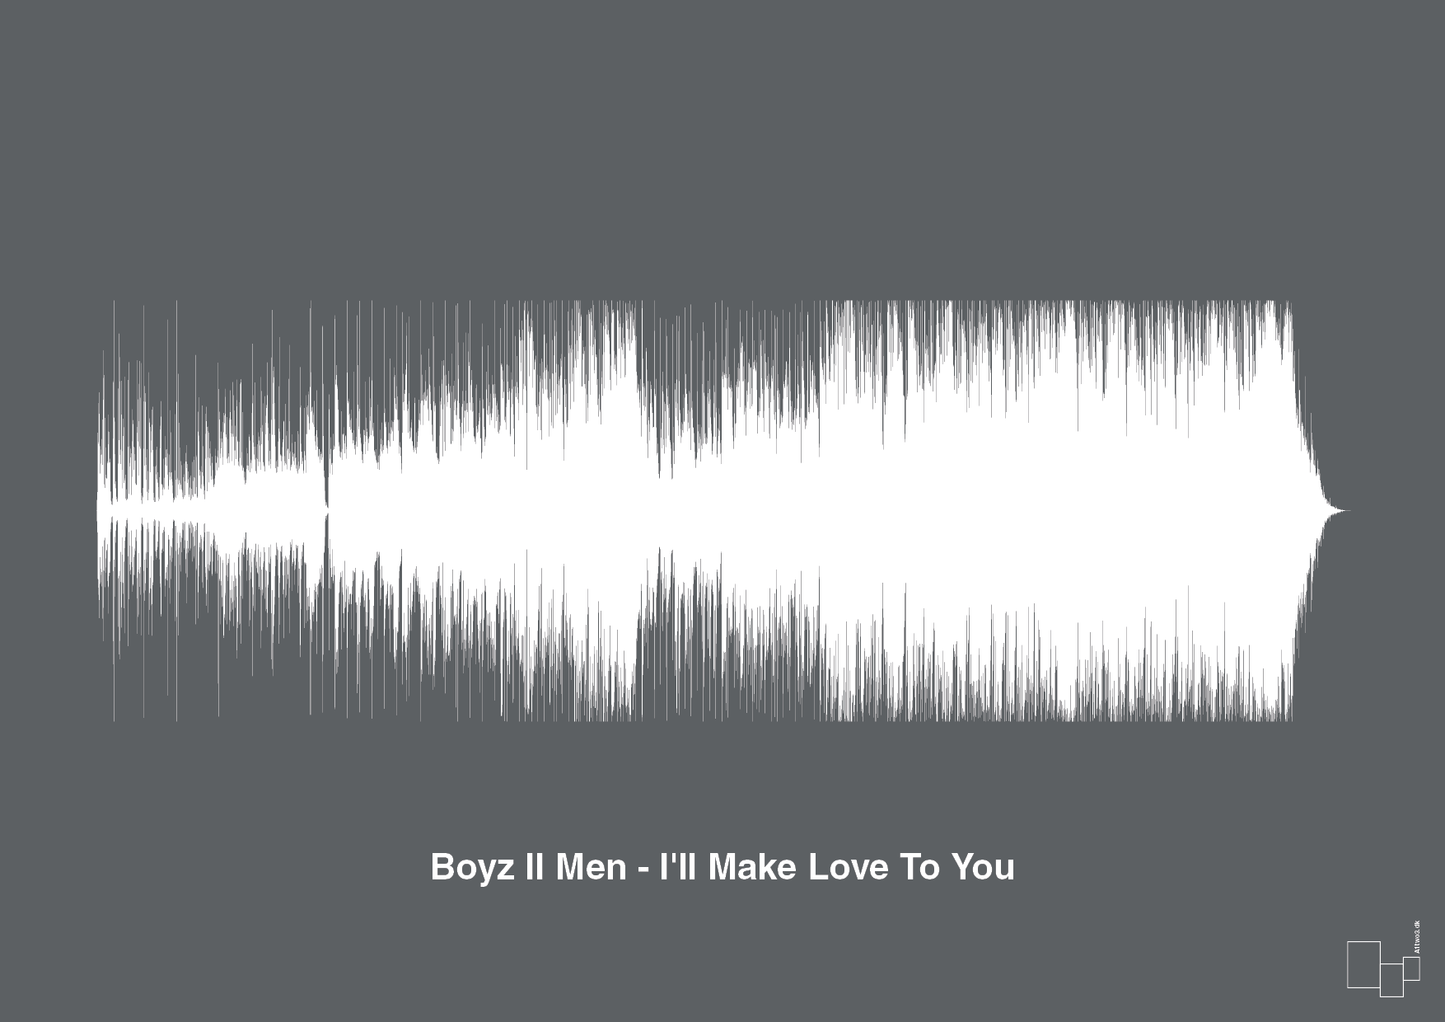 boyz II men - i'll make love to you - Plakat med Musik i Graphic Charcoal